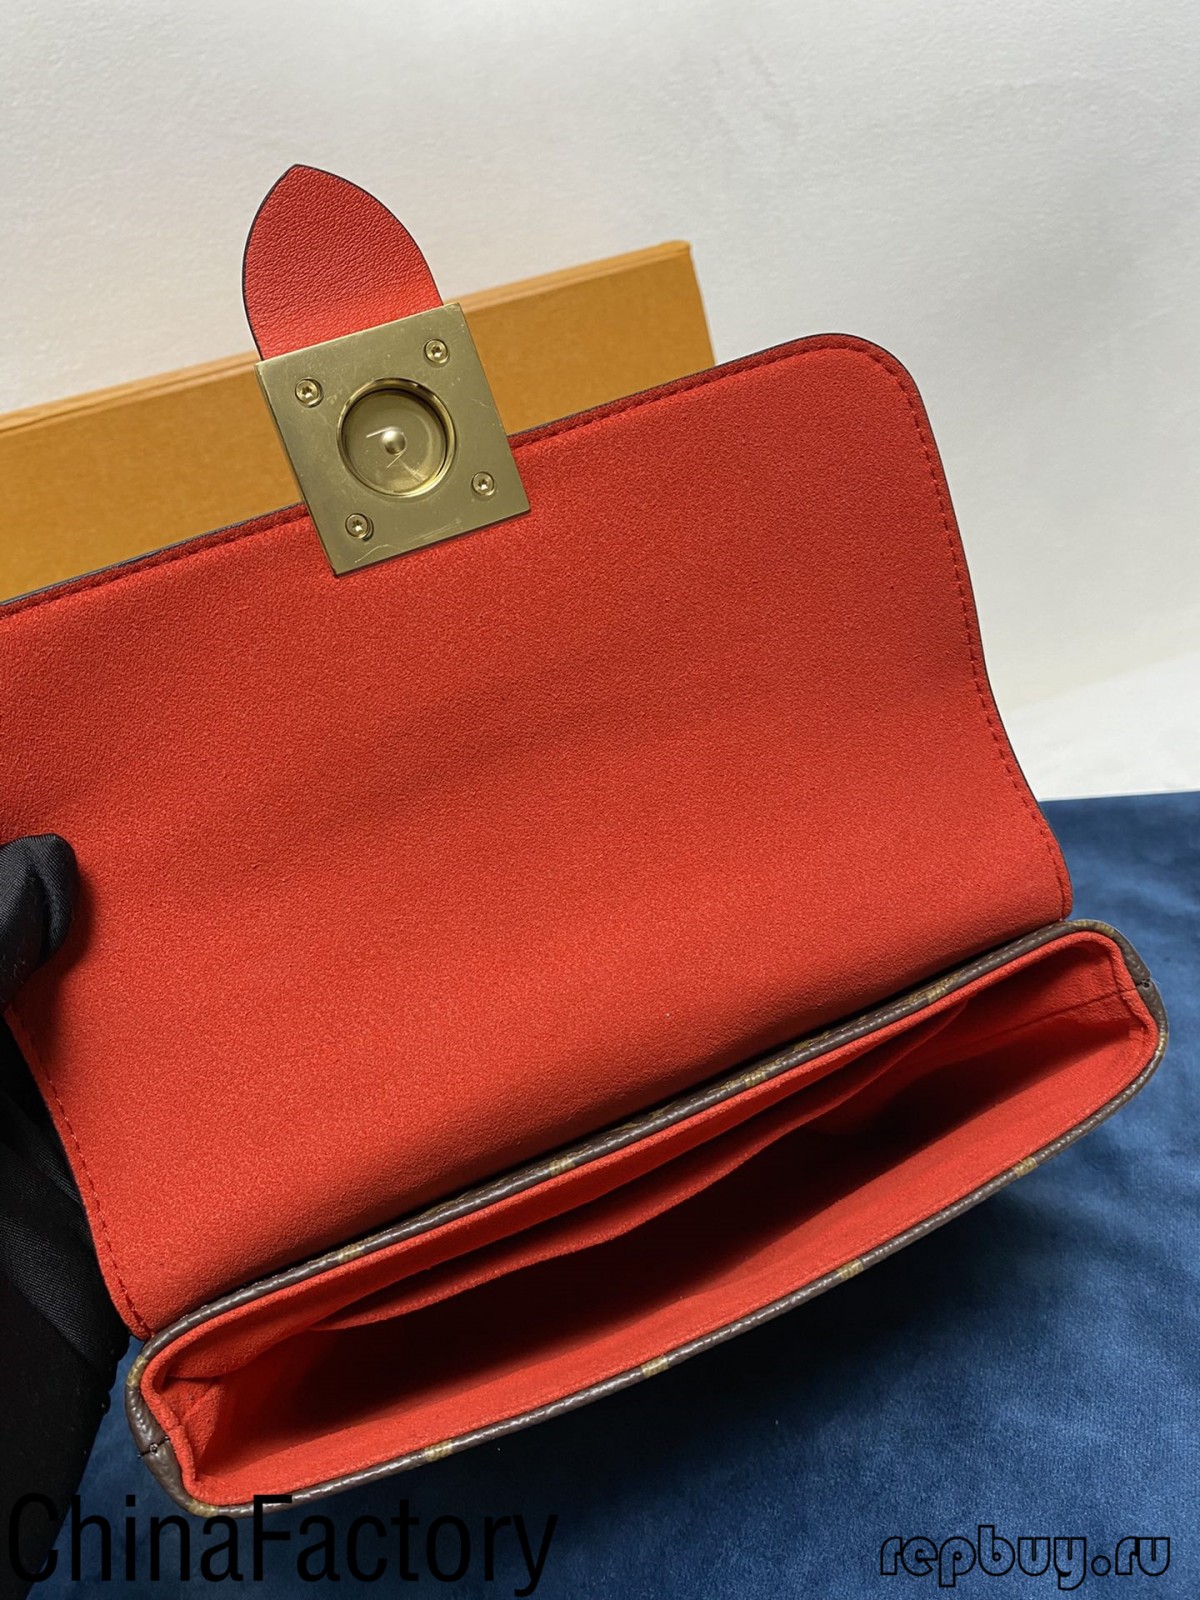 Some aaa replica bags reviews to share (2022 new issue)-Best Quality Fake designer Bag Review, Replica designer bag ru